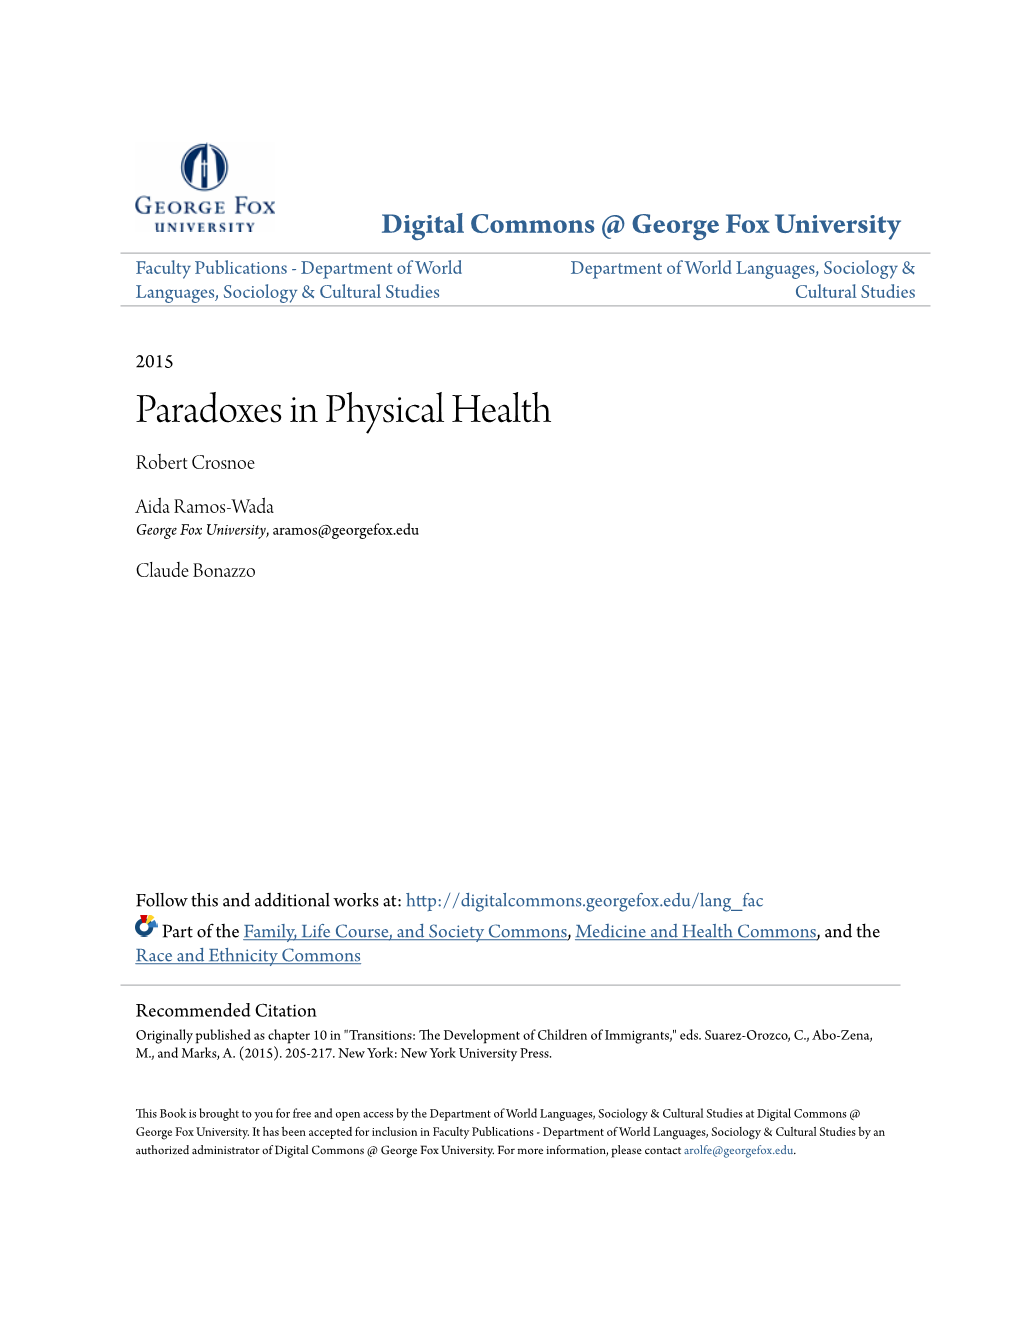 Paradoxes in Physical Health Robert Crosnoe